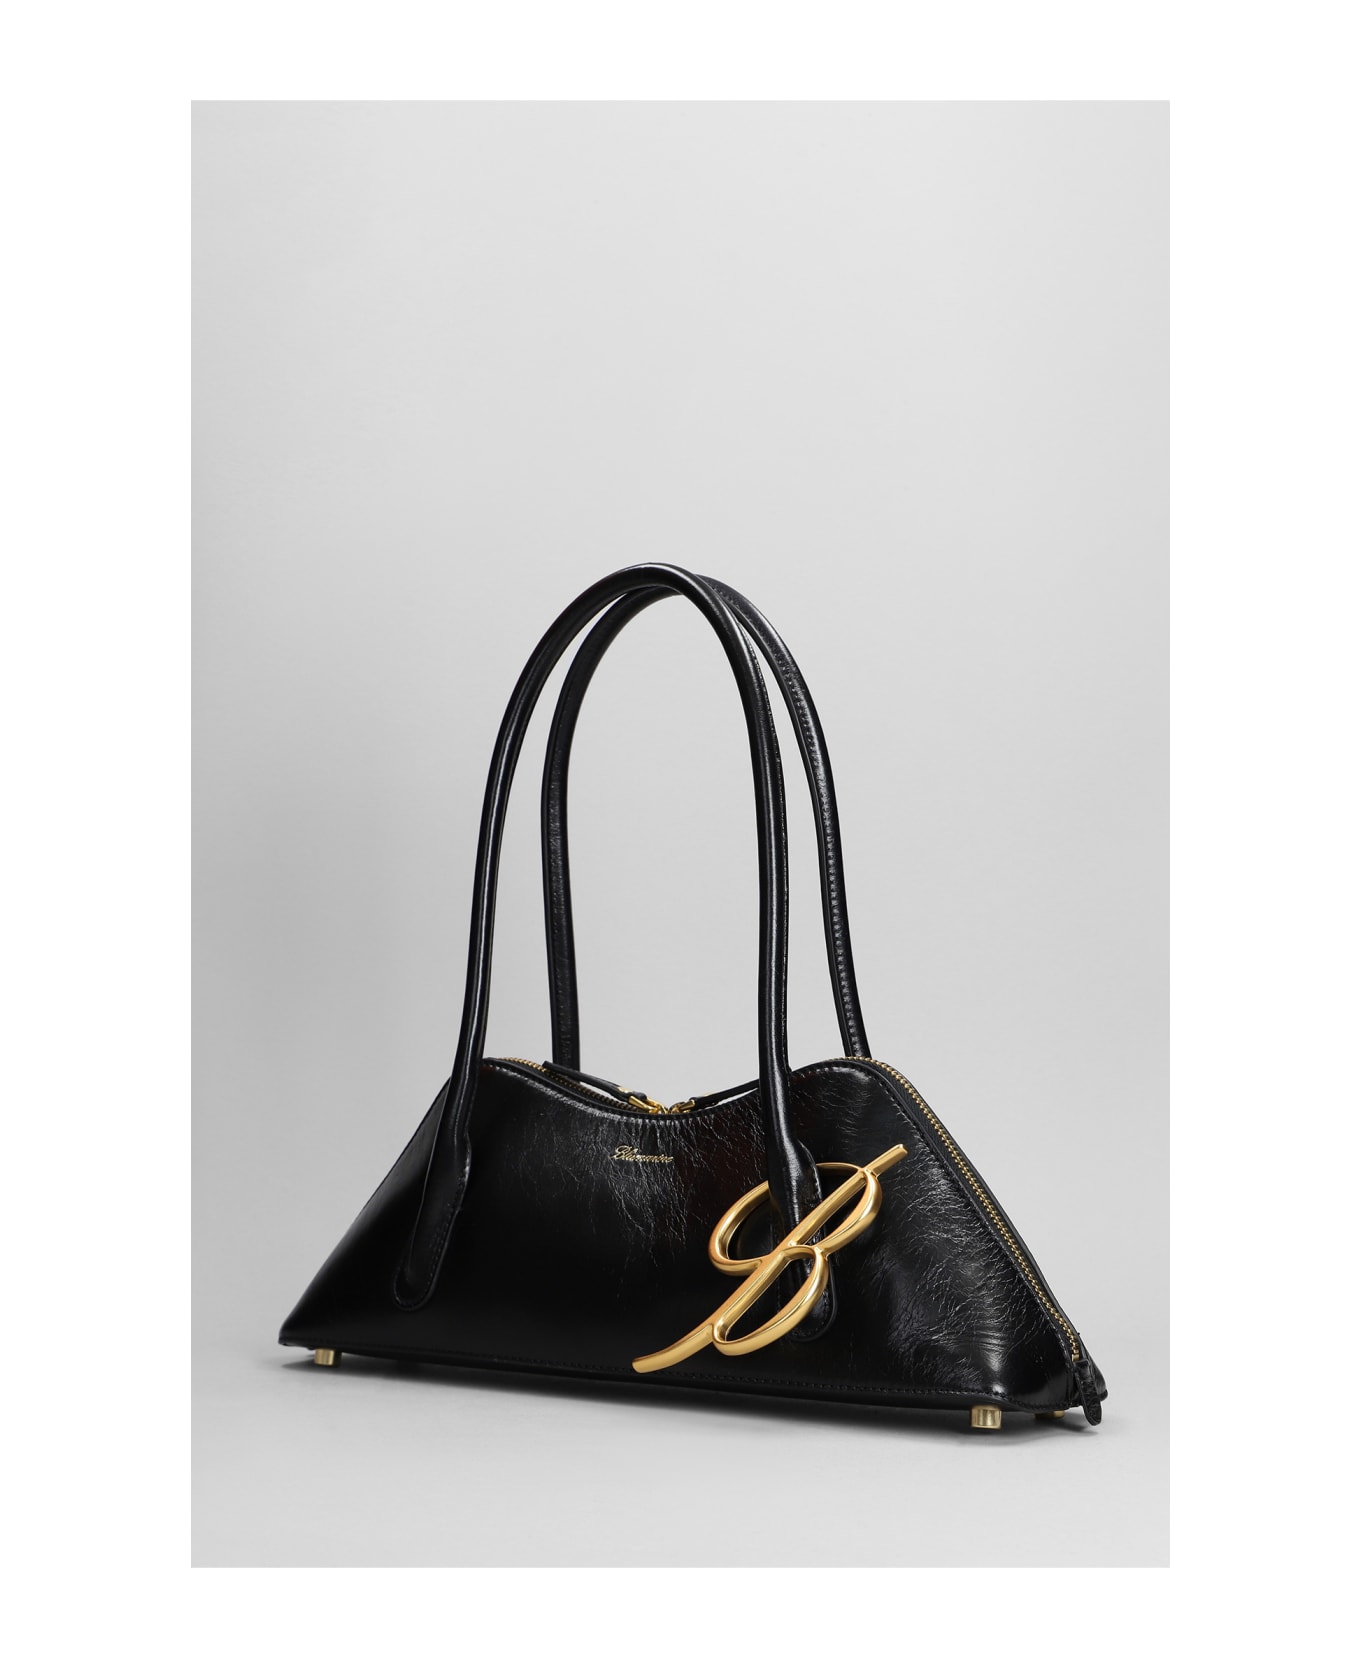 Blumarine Hand Bag In Black Leather - black